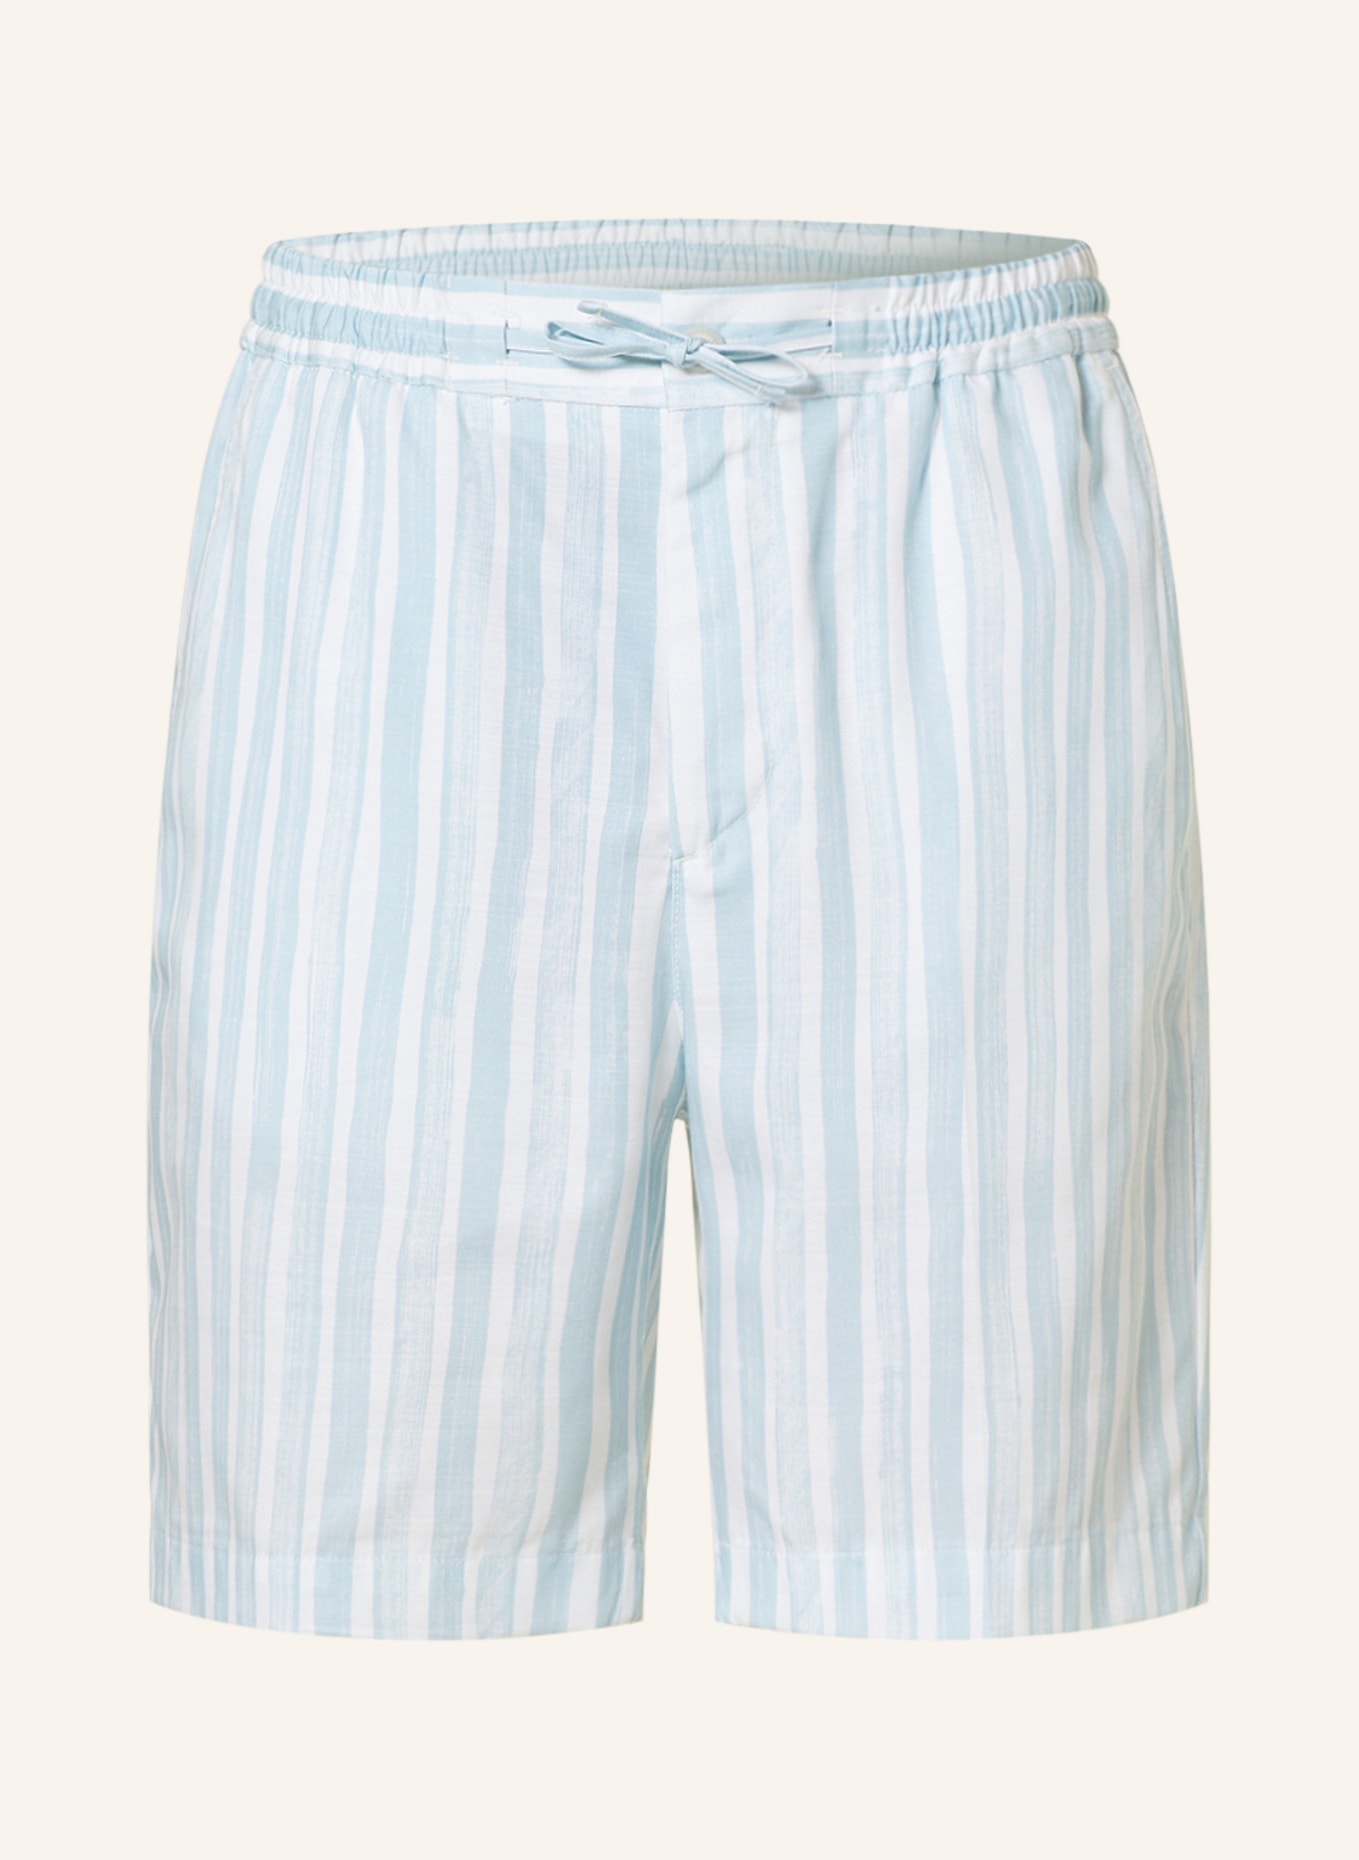 J.LINDEBERG Shorts, Farbe: HELLBLAU/ WEISS (Bild 1)